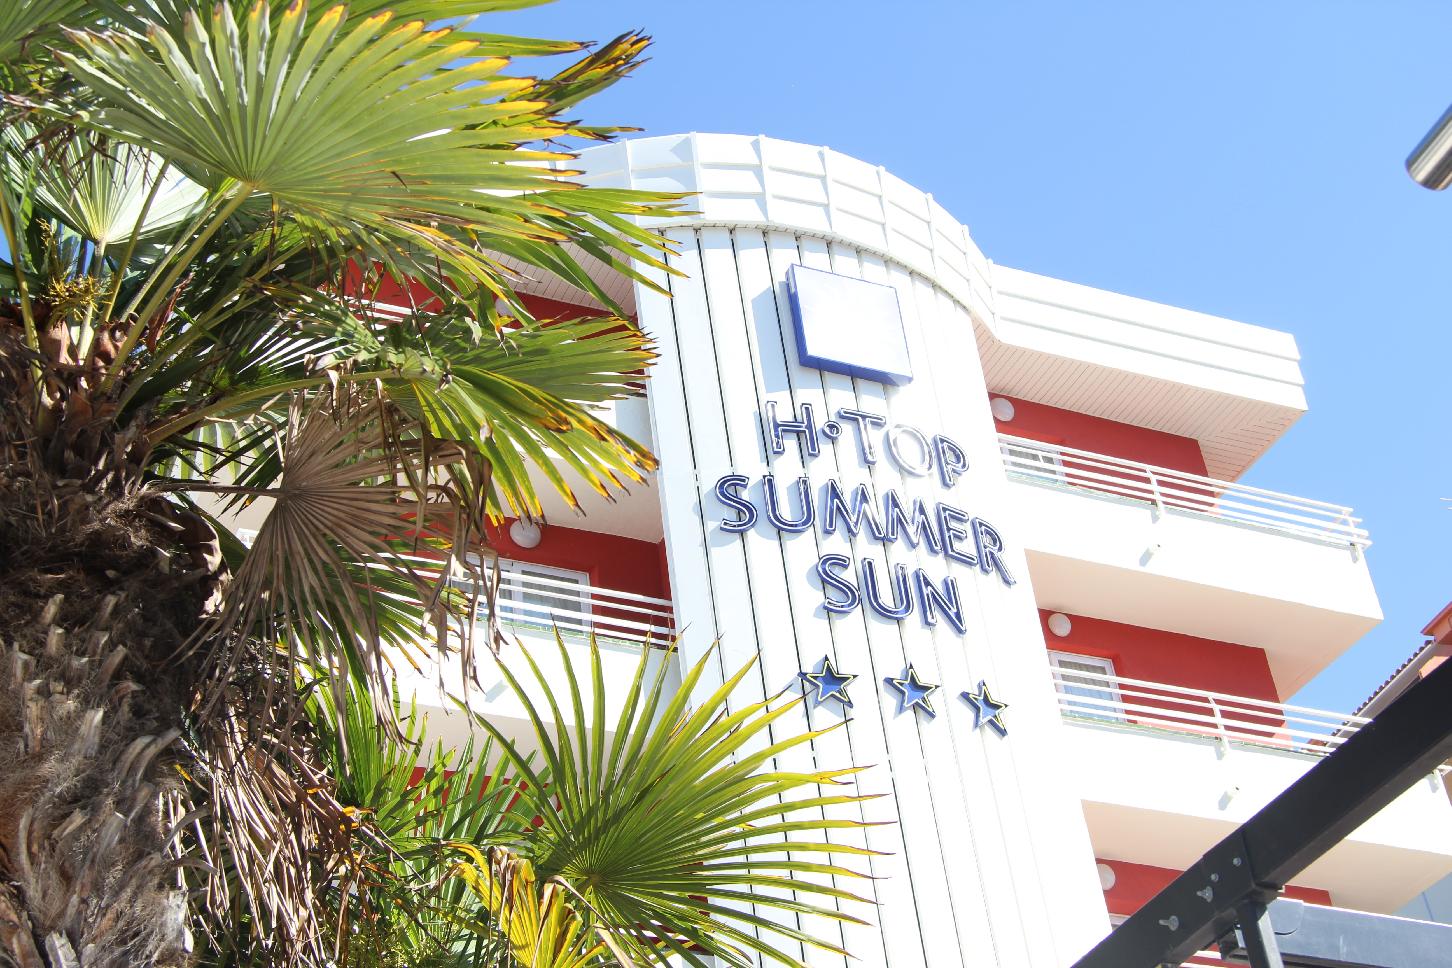 Fotos del hotel - H TOP SUMMER SUN